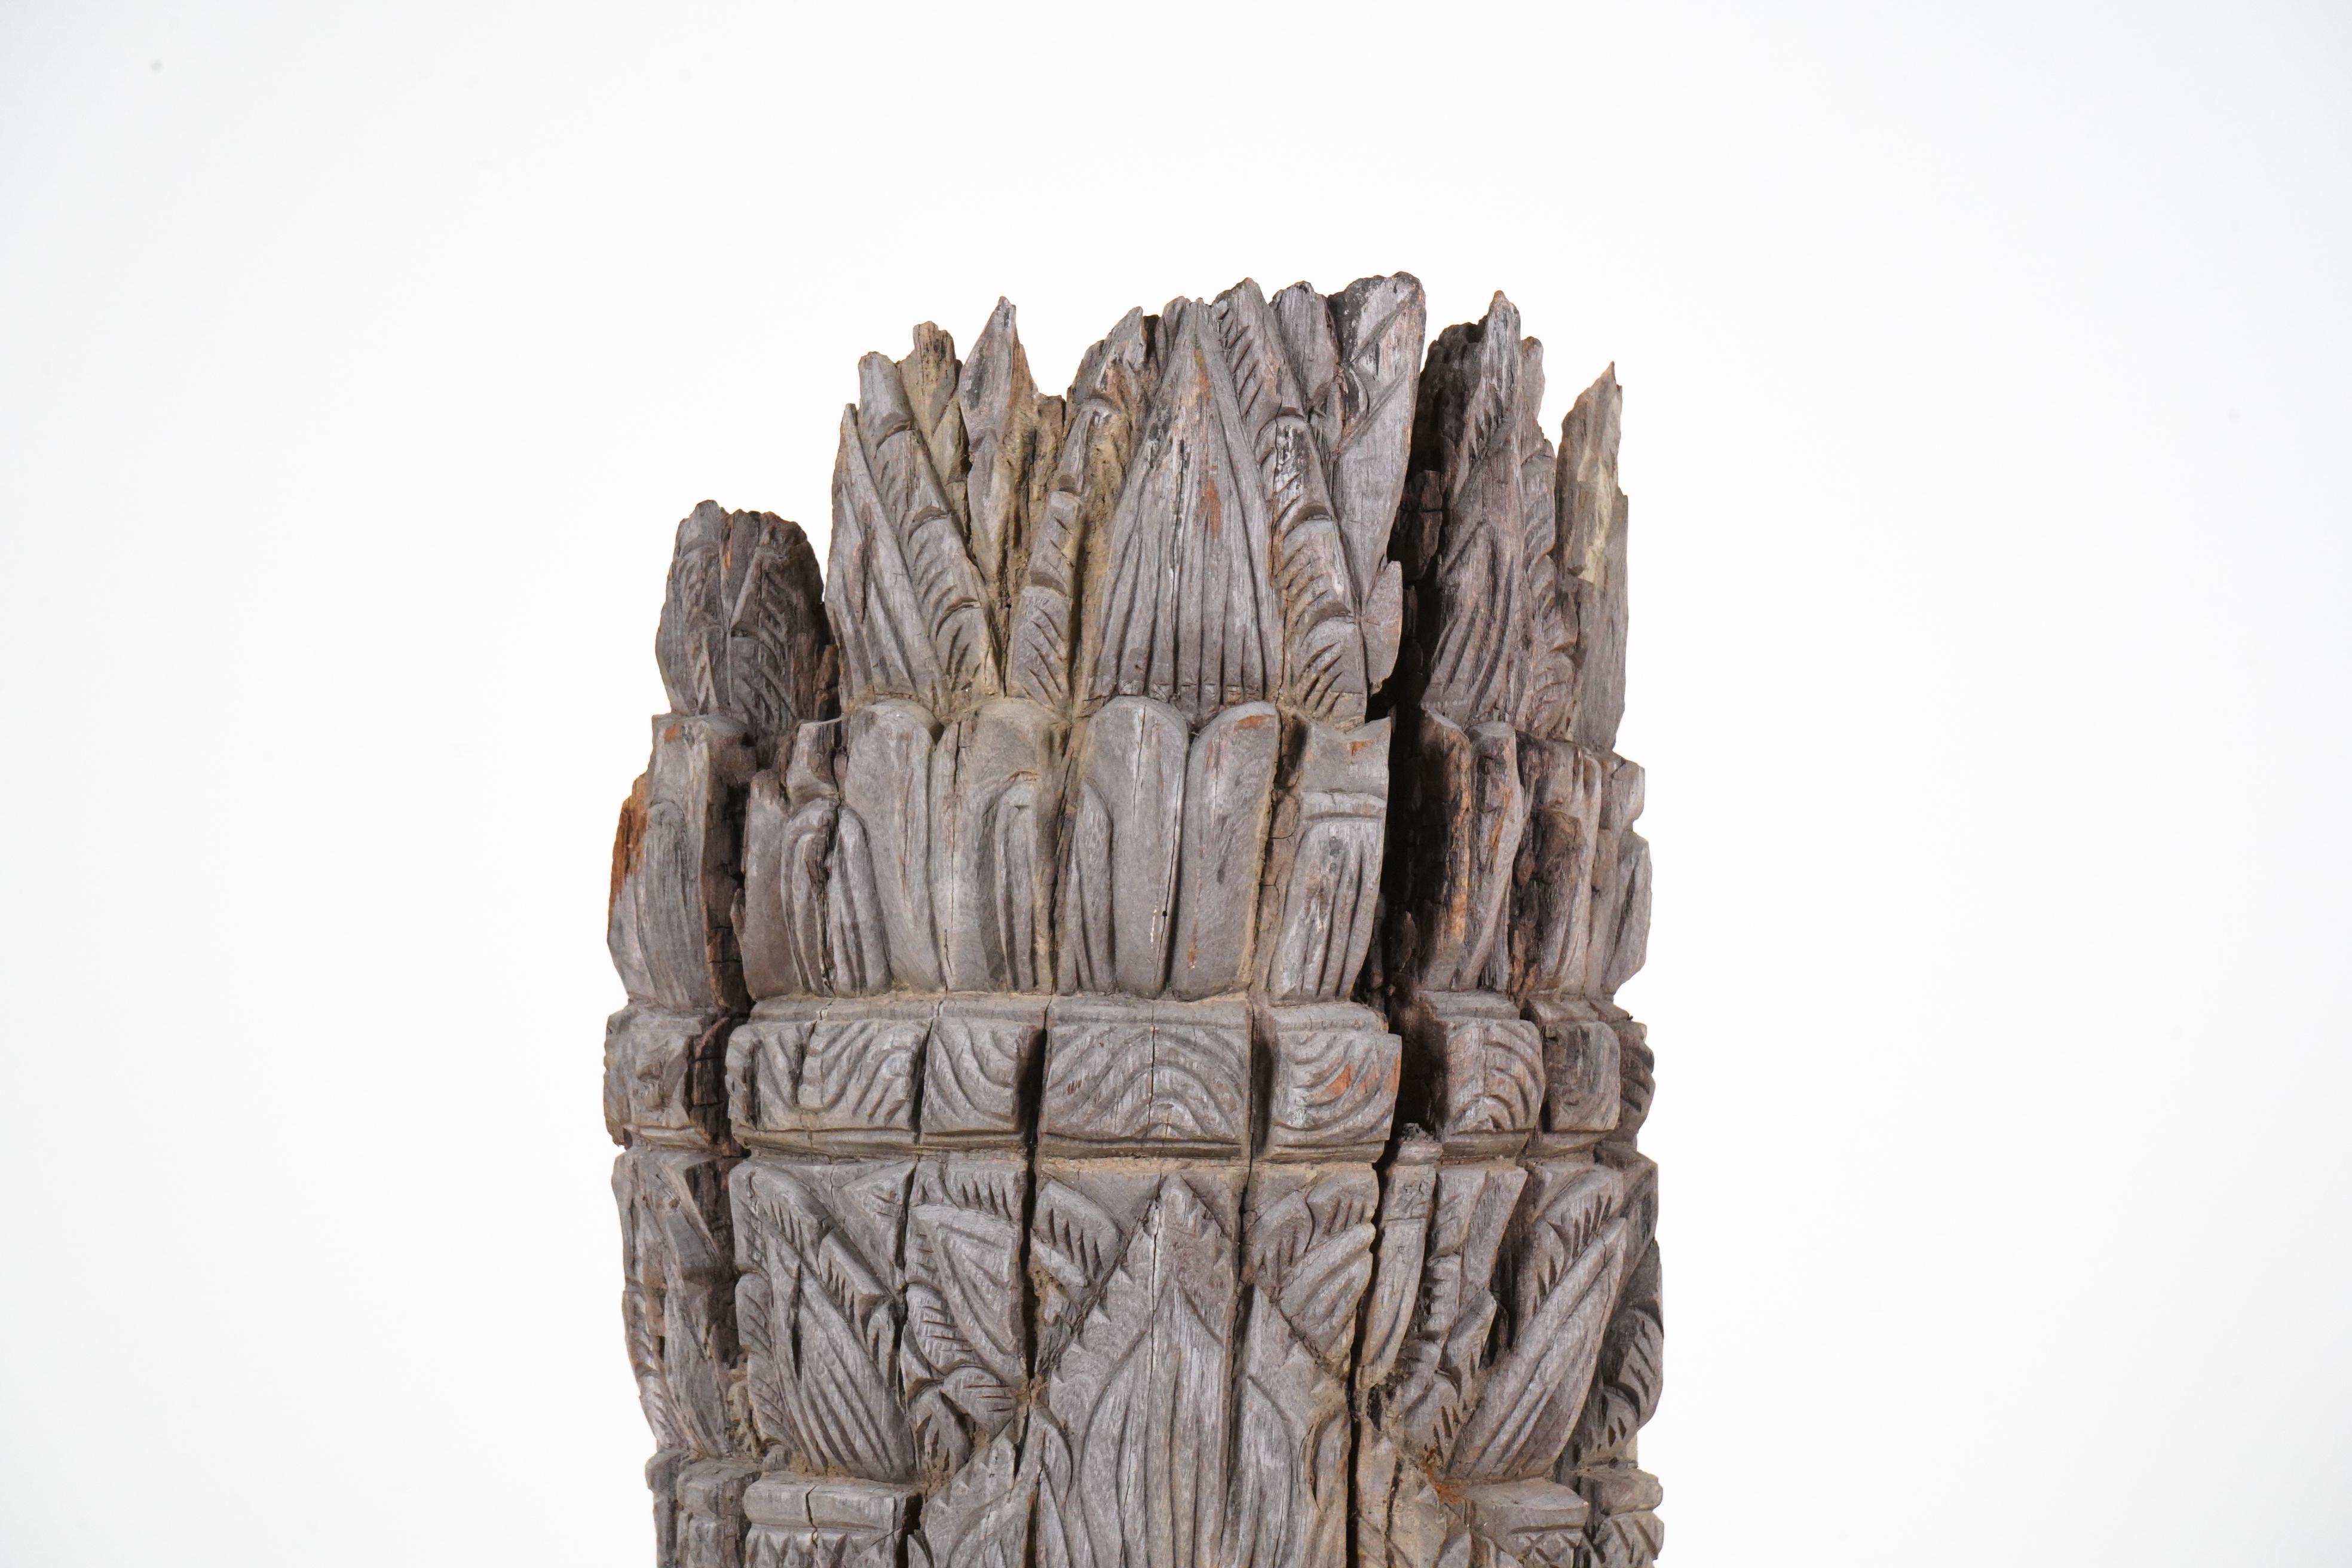 Contemporary A Teak Wood Sculpture of a Cambodian Apsara Goddess